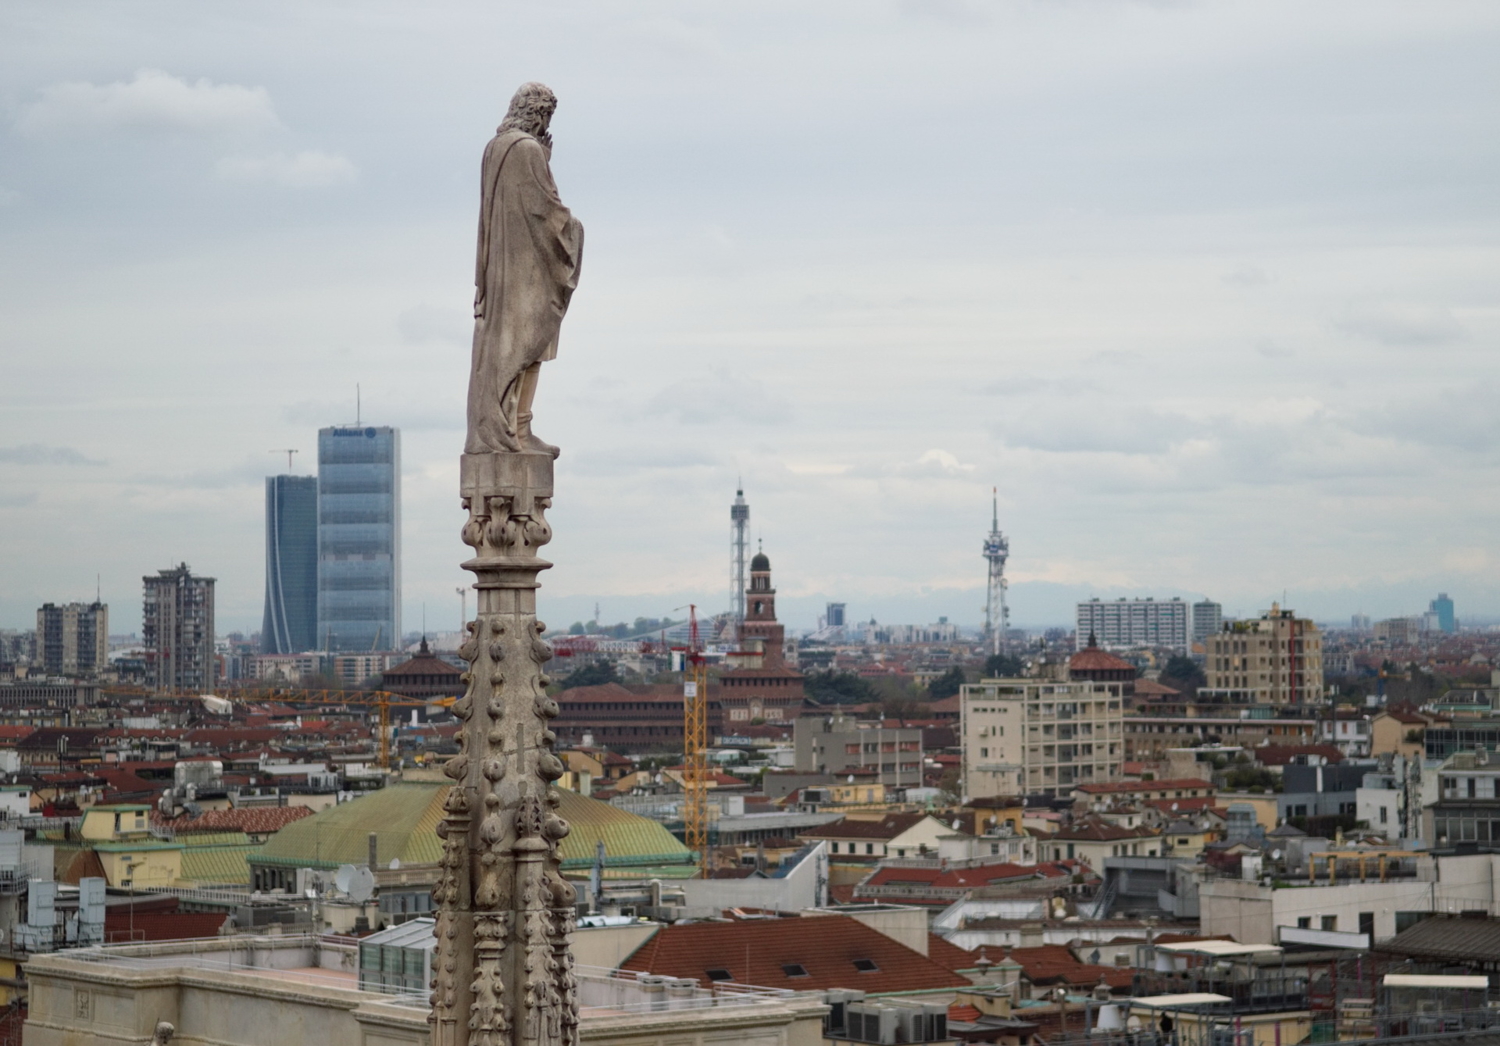 Вид на город с крыши Миланского собора